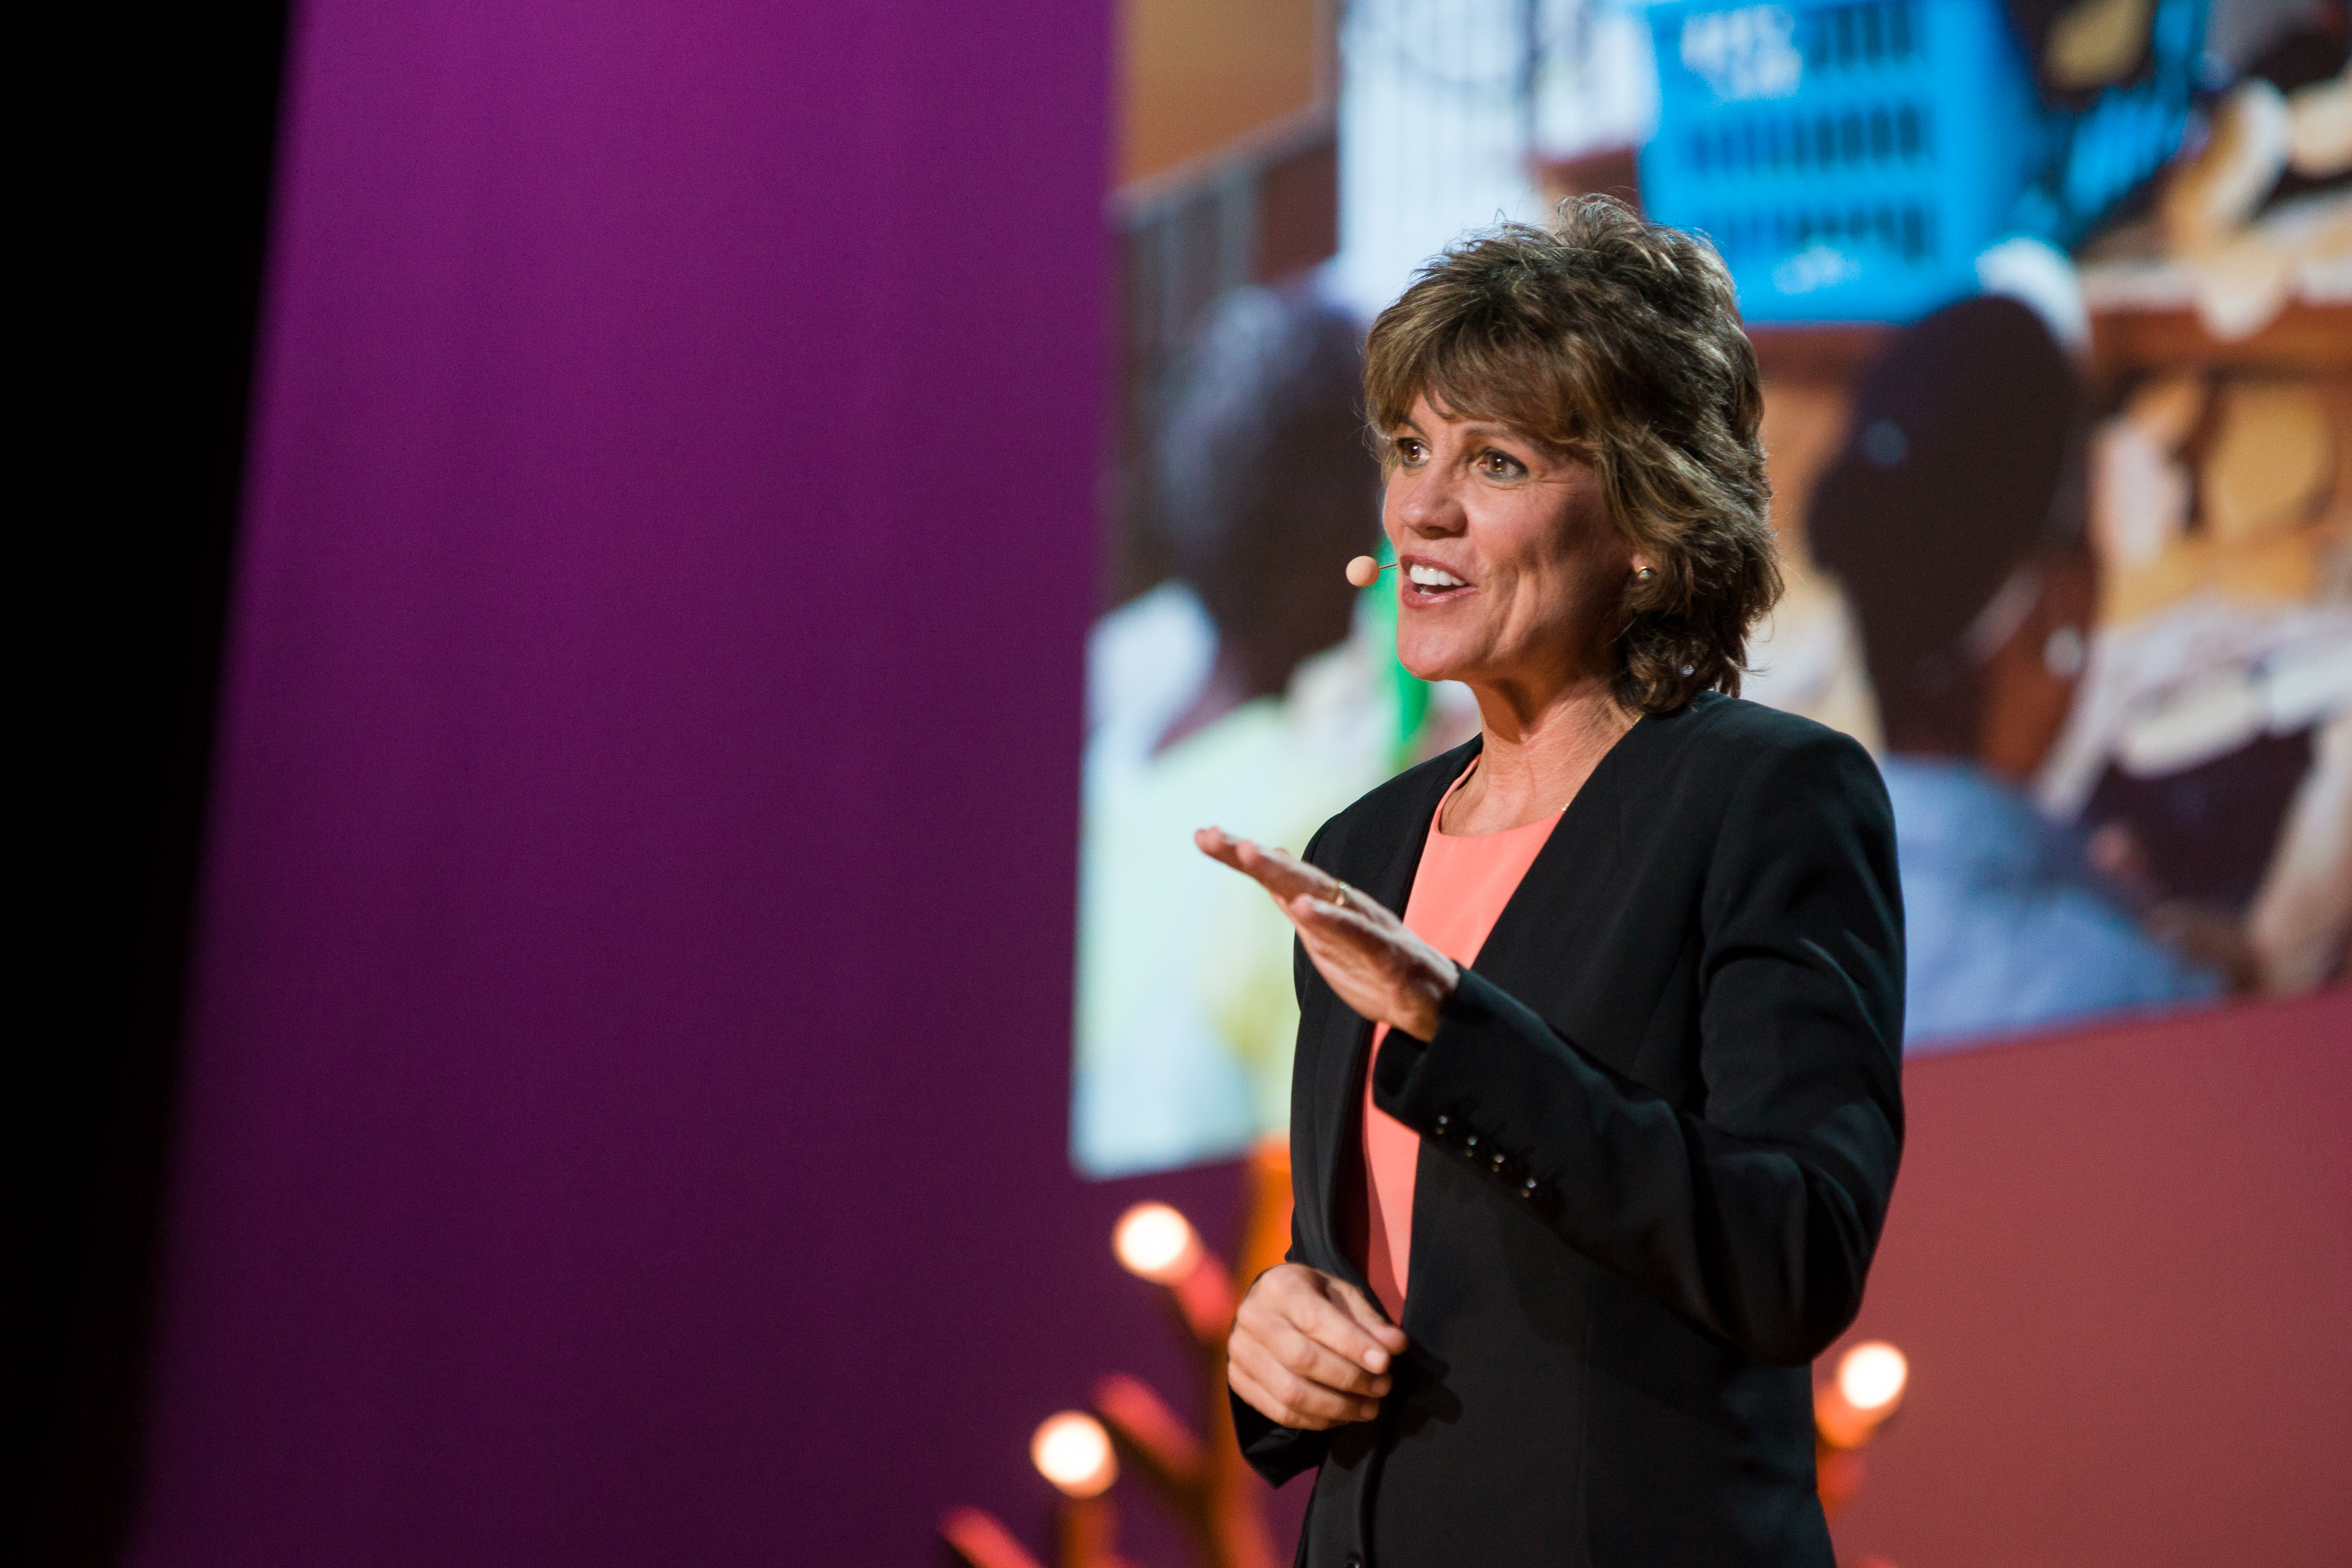 Romaine Seguin speaks at TED@UPS - September 15, 2016 at SCADshow, Atlanta, Georgia. Photo: Jason Hales / TED